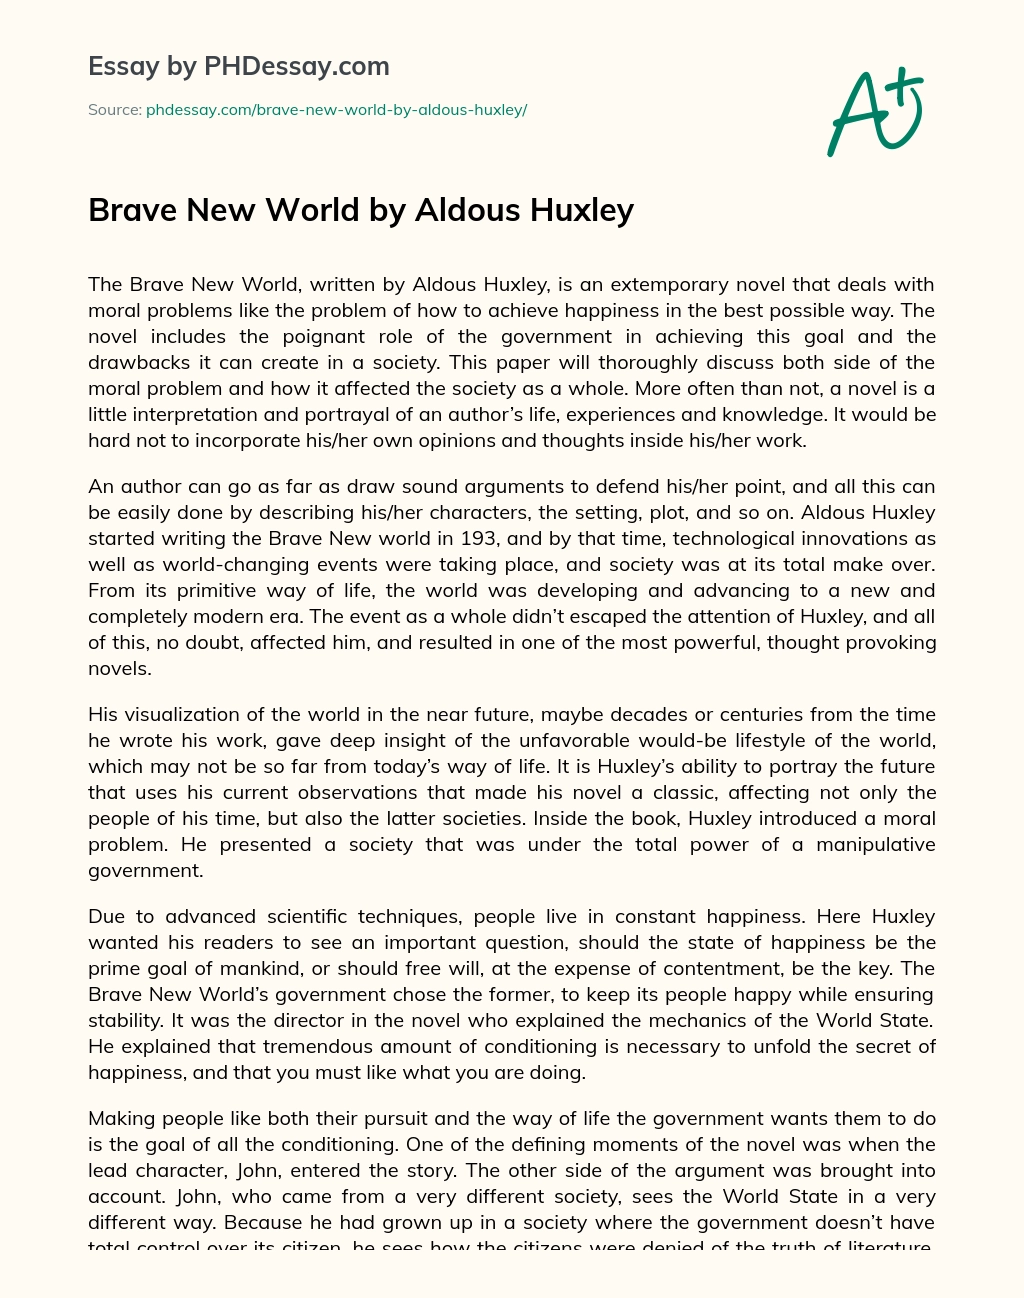 Brave New World by Aldous Huxley essay